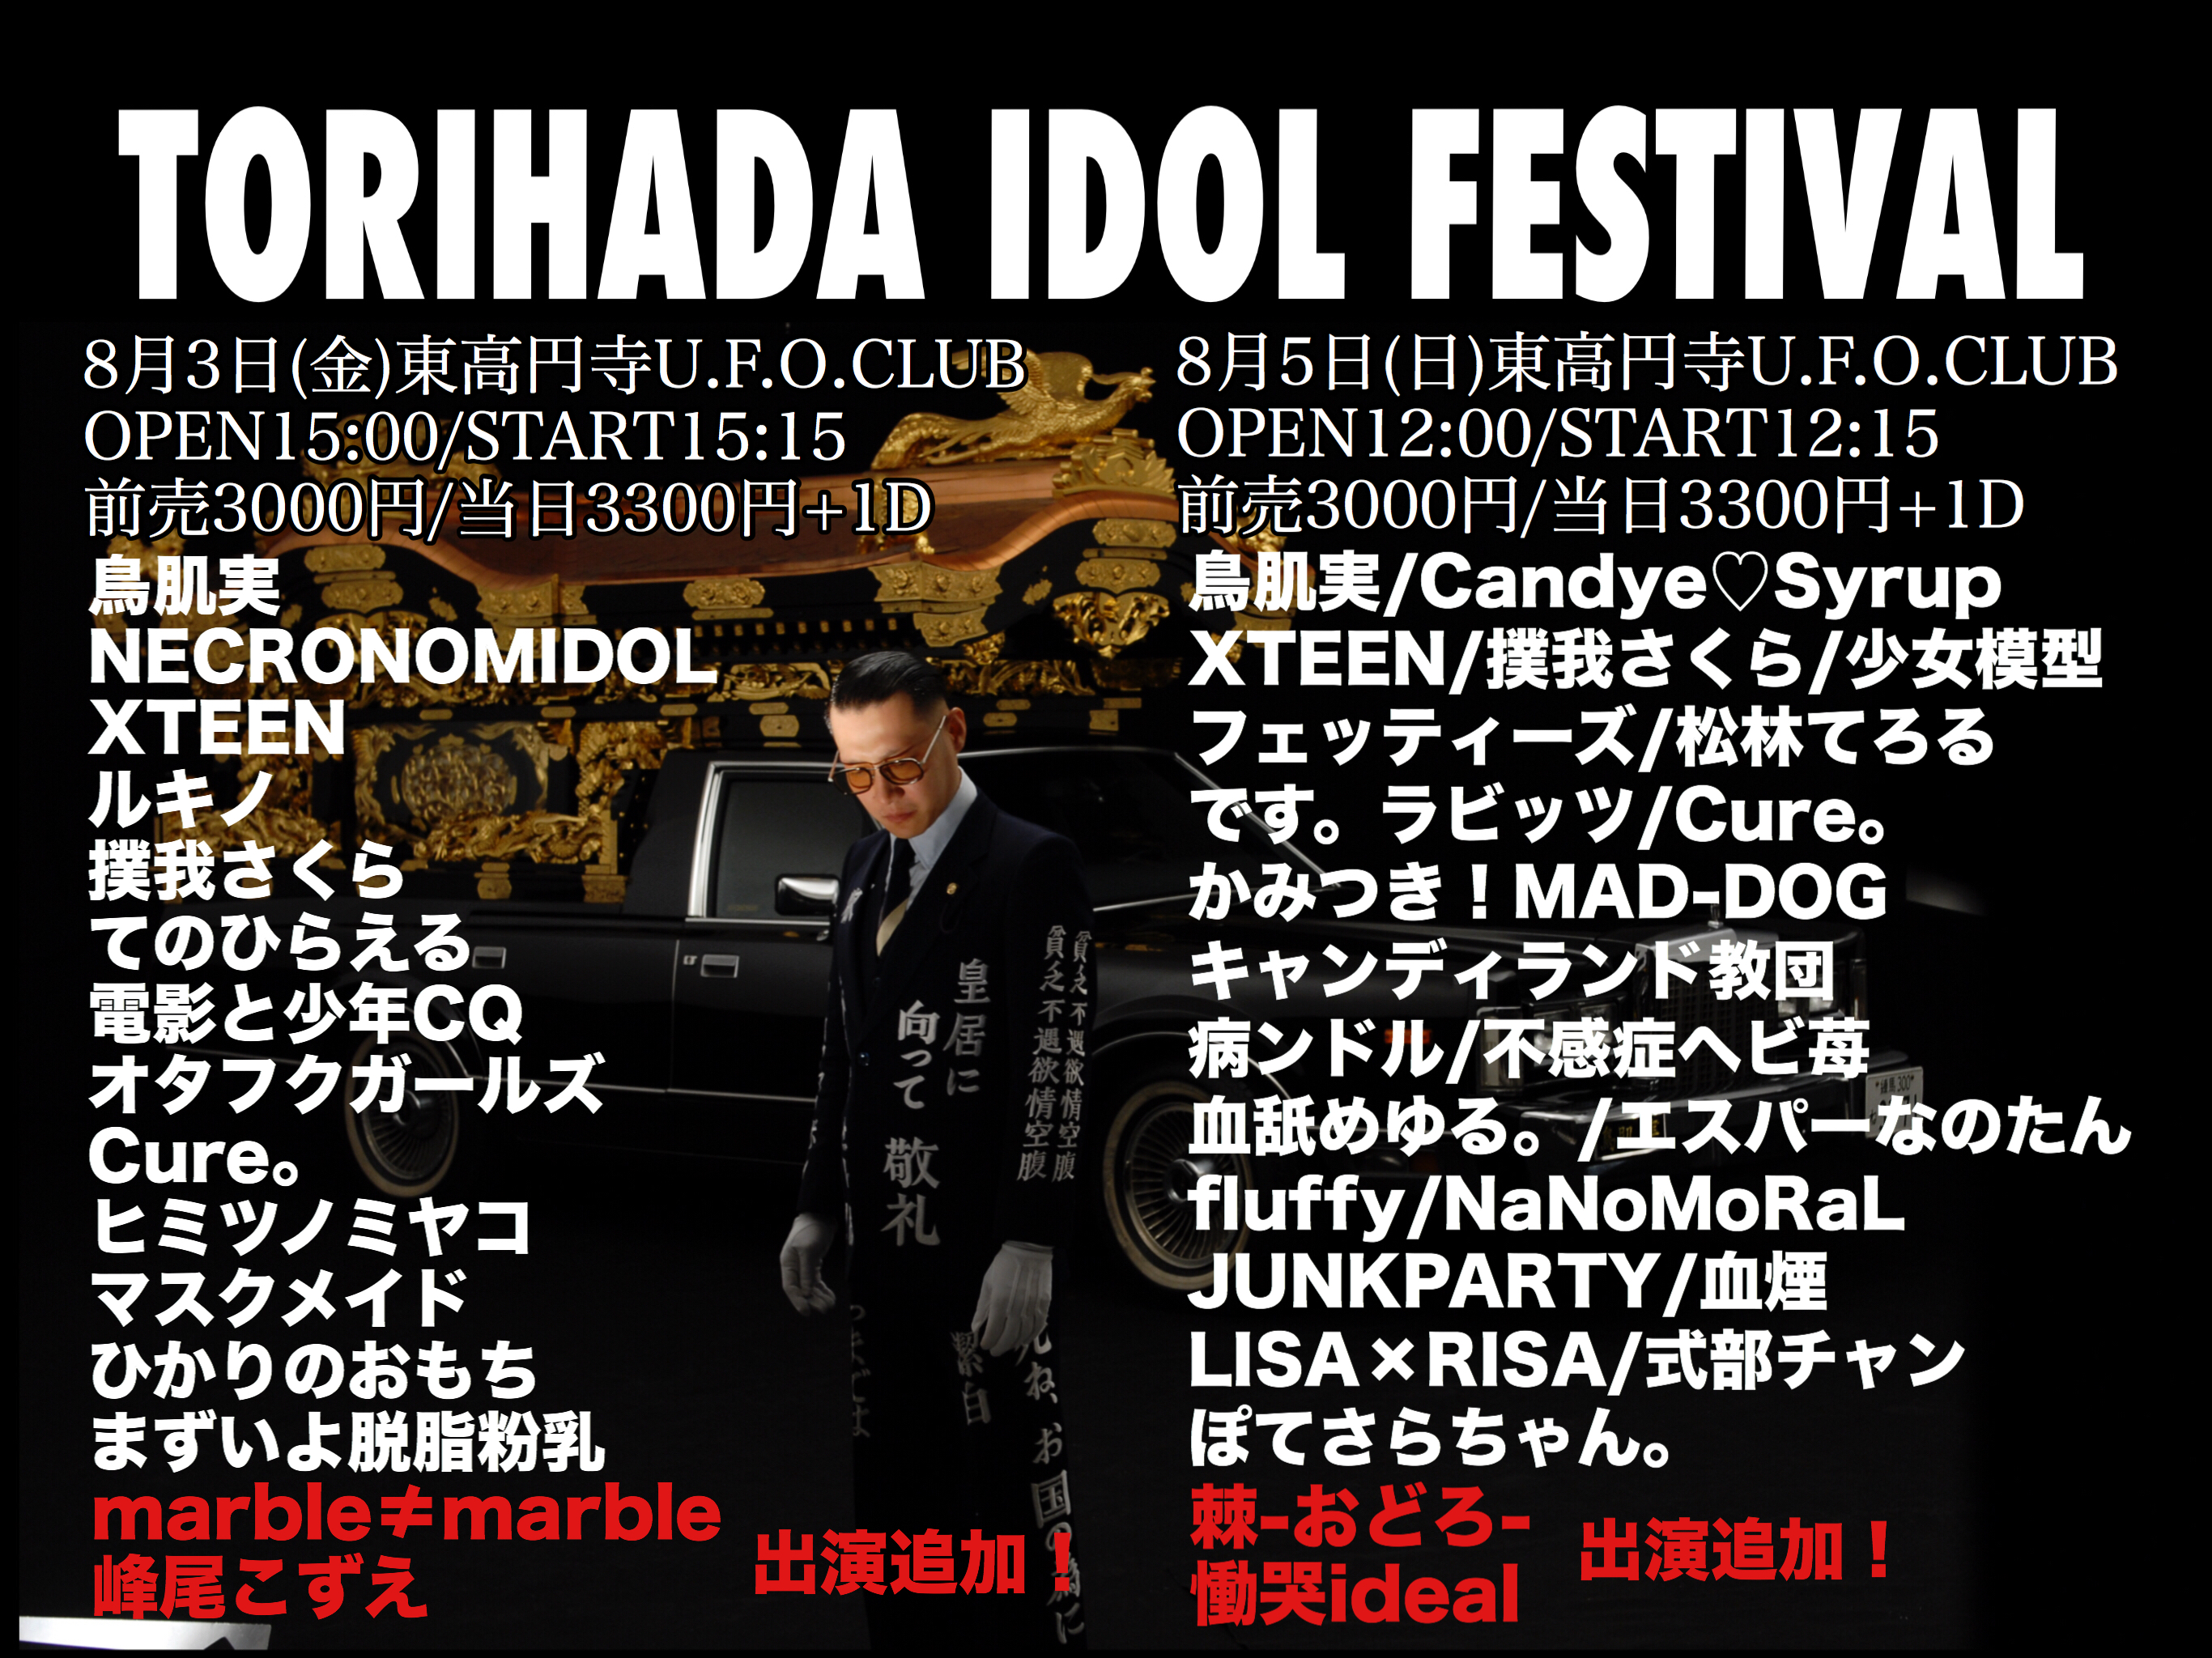 『TORIHADA IDOL FESTIVAL』 メインイメージ